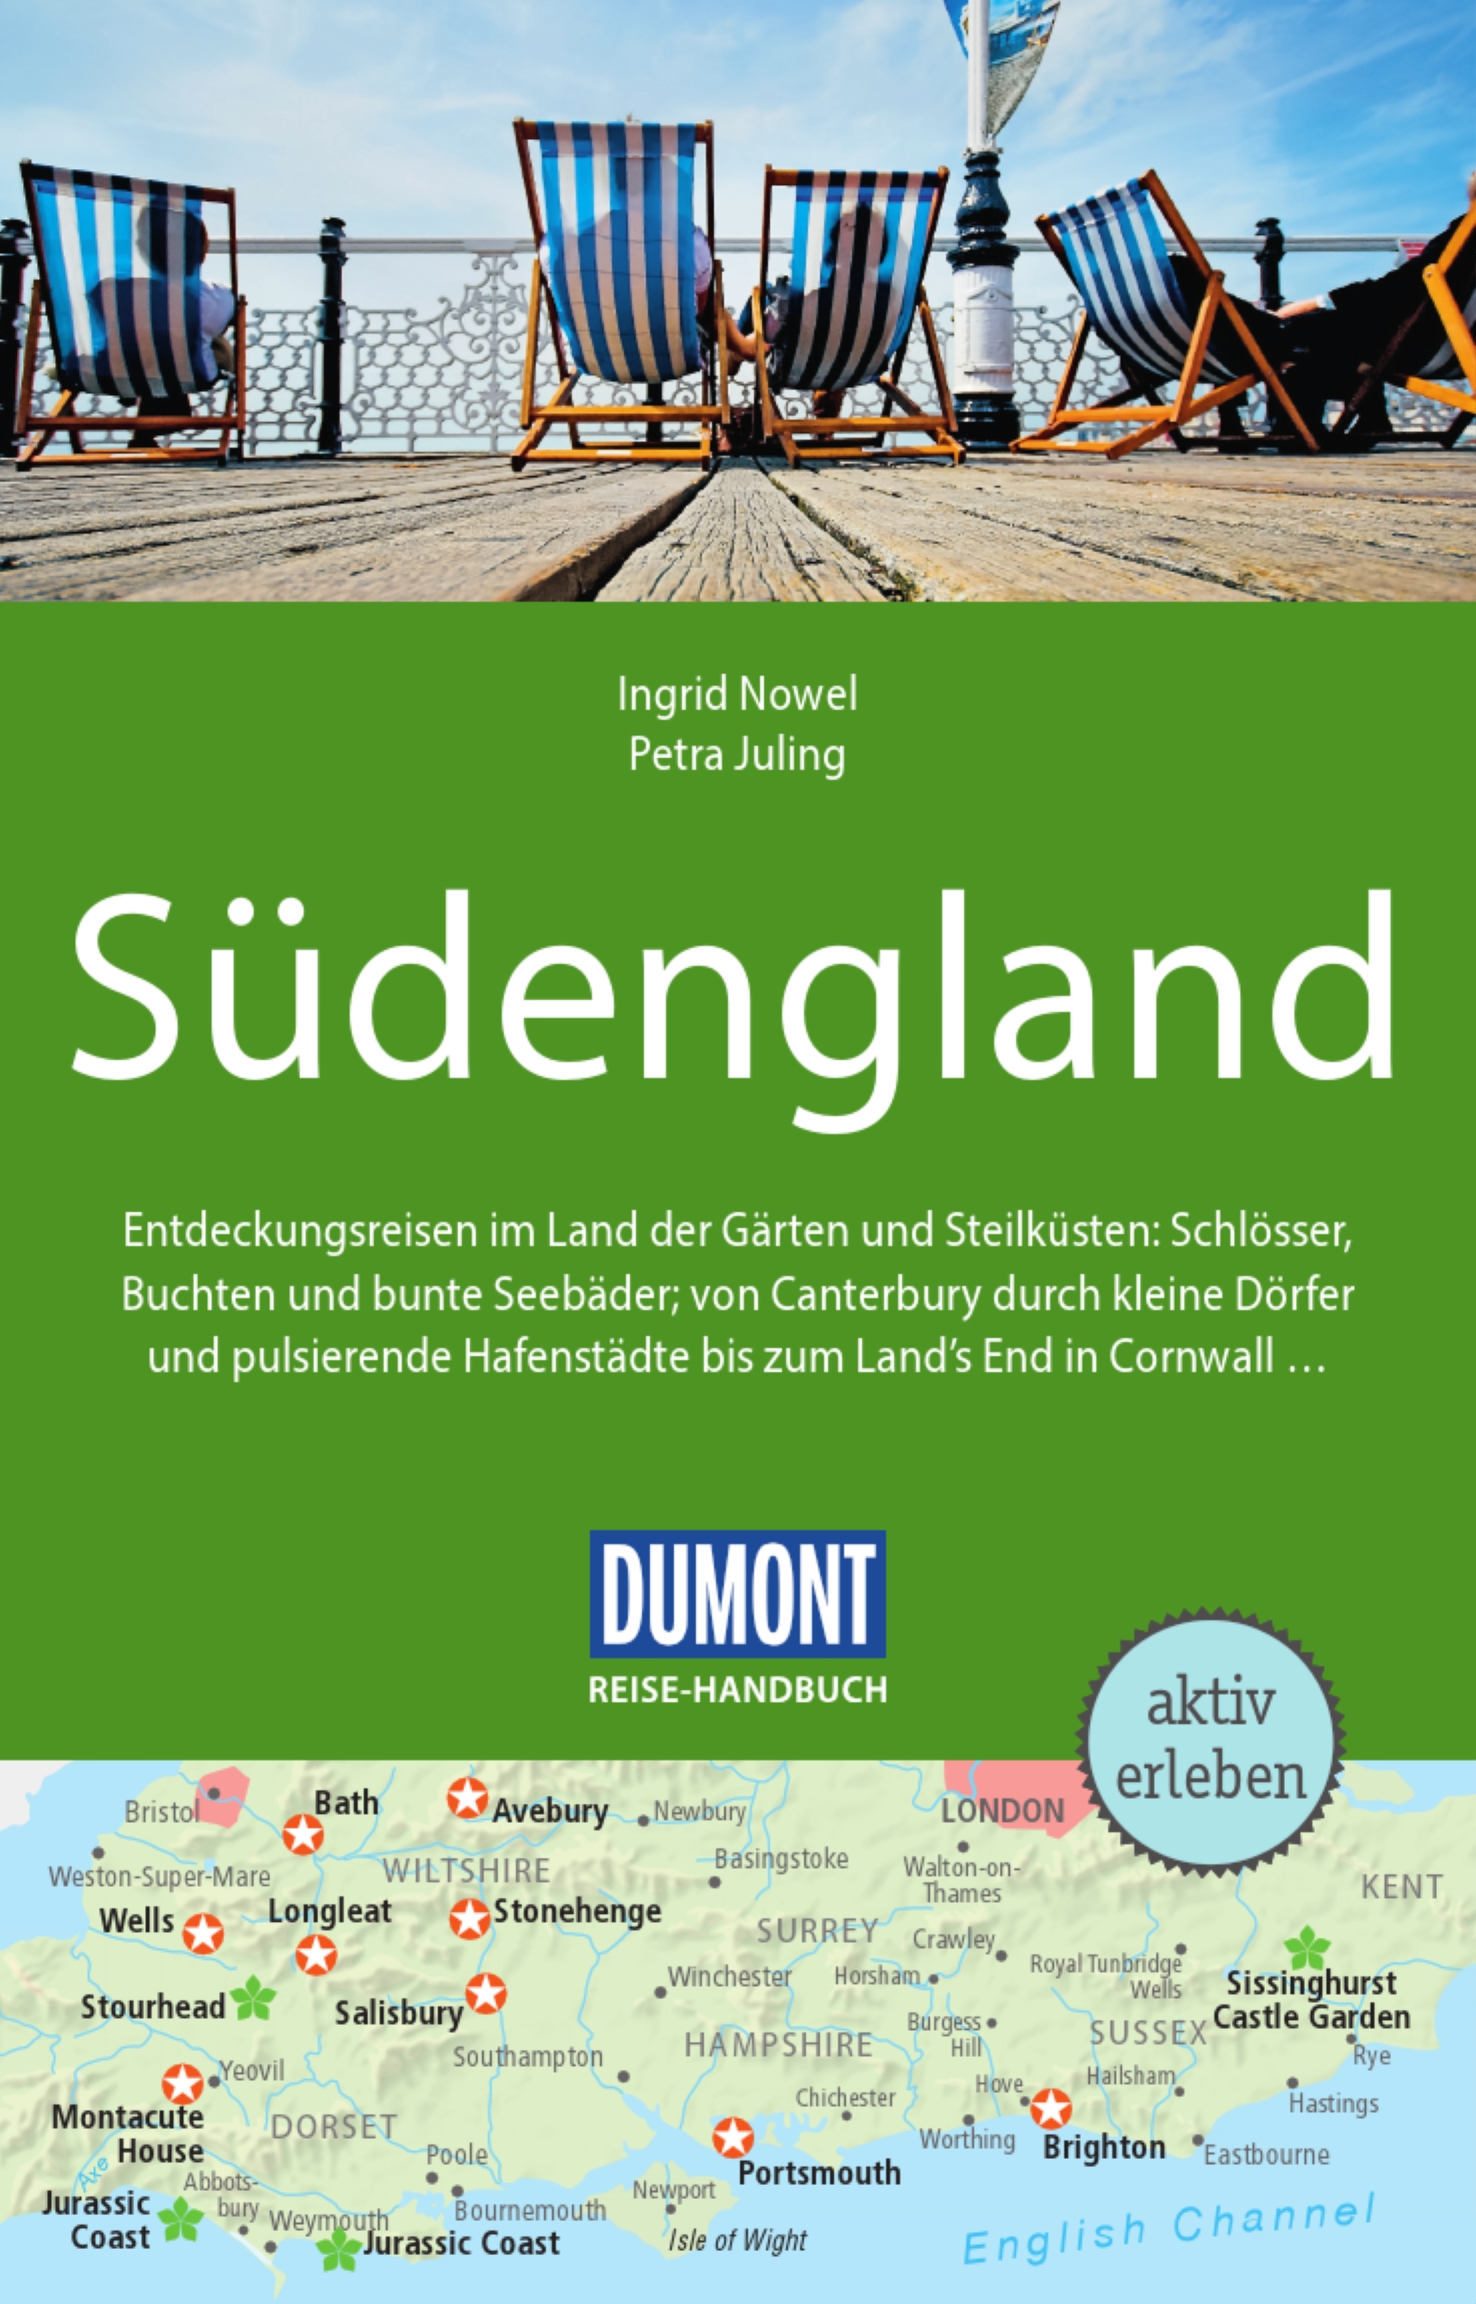 DuMont Reise-Handbuch – Südengland (Cover)